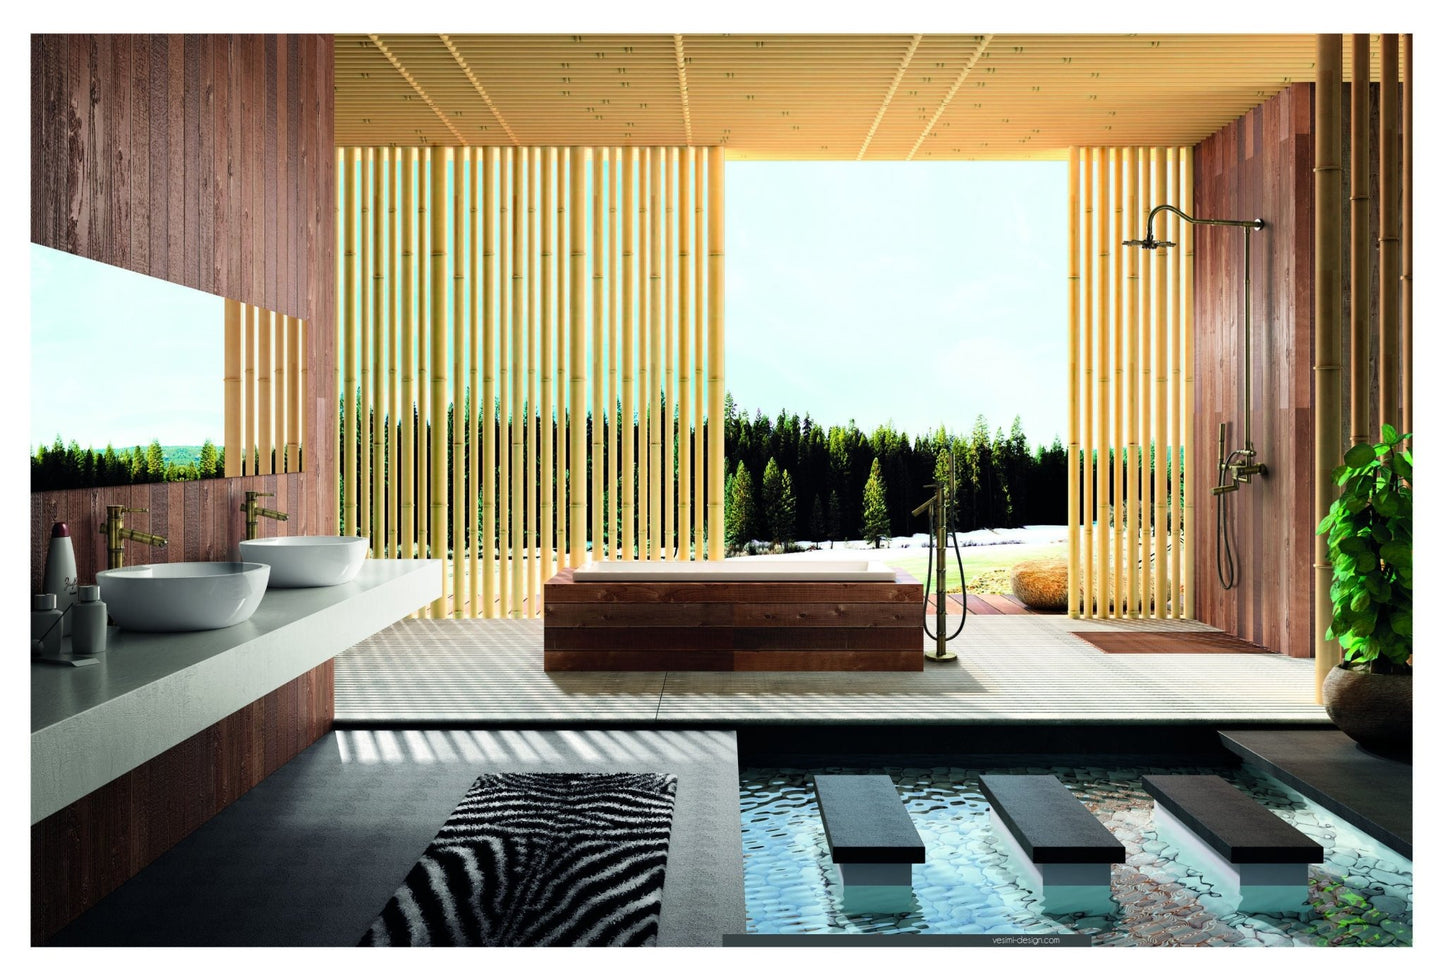 Bamboo Bronze Design Bidet Faucet - |VESIMI Design| Luxury and Rustic bathrooms online